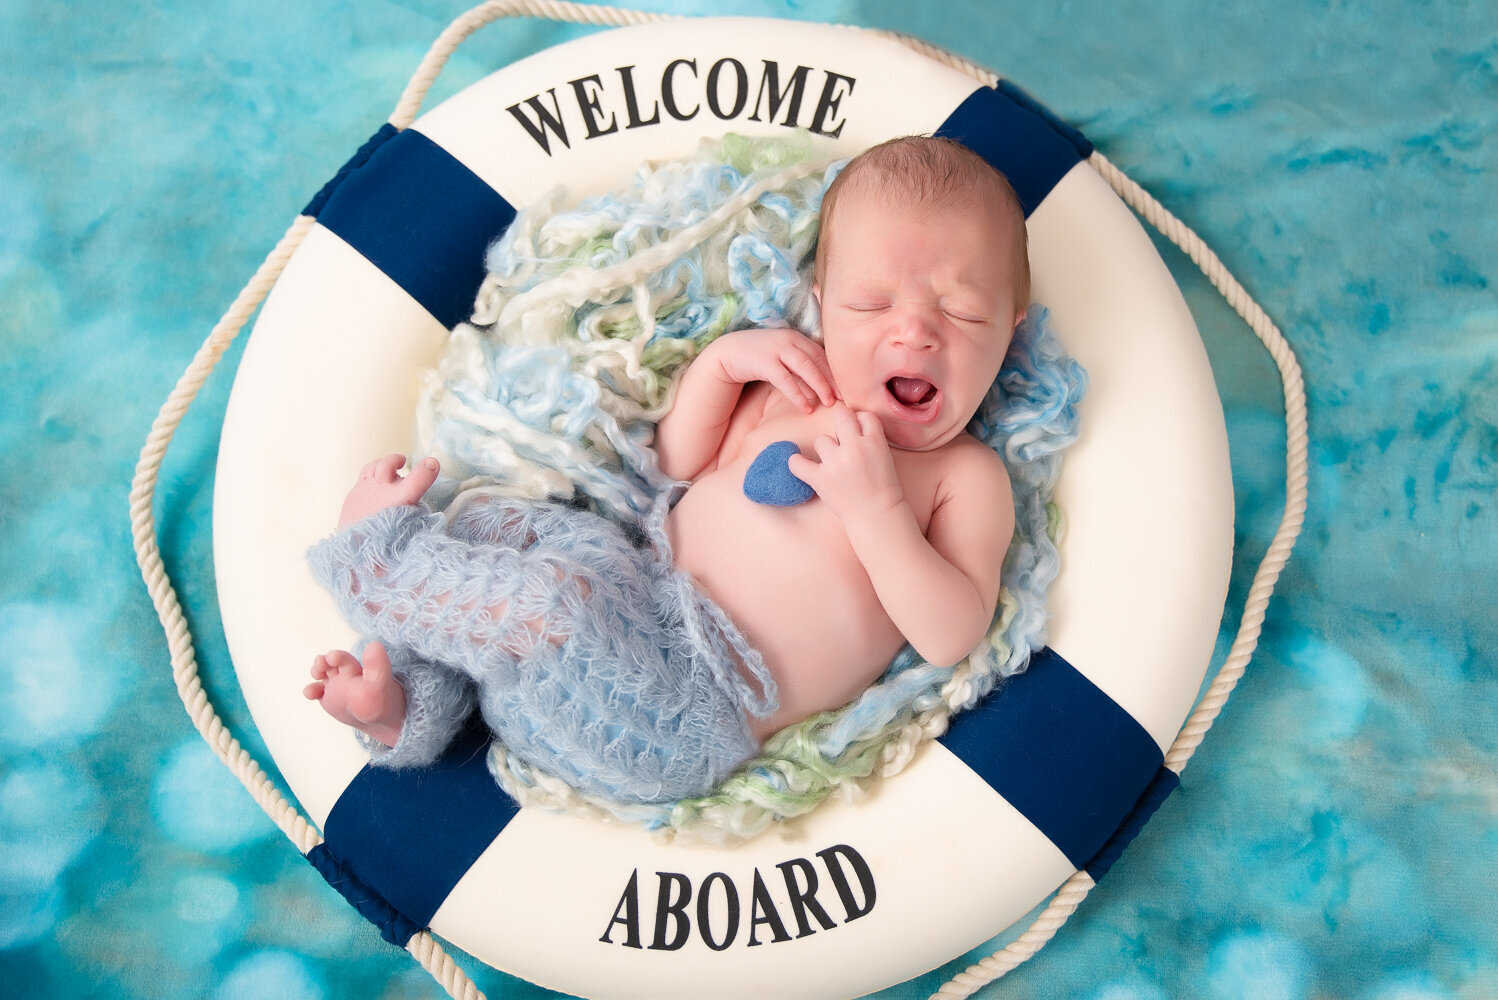 Rahway_NJ_Newborn_Boy_Welcome_Aboard